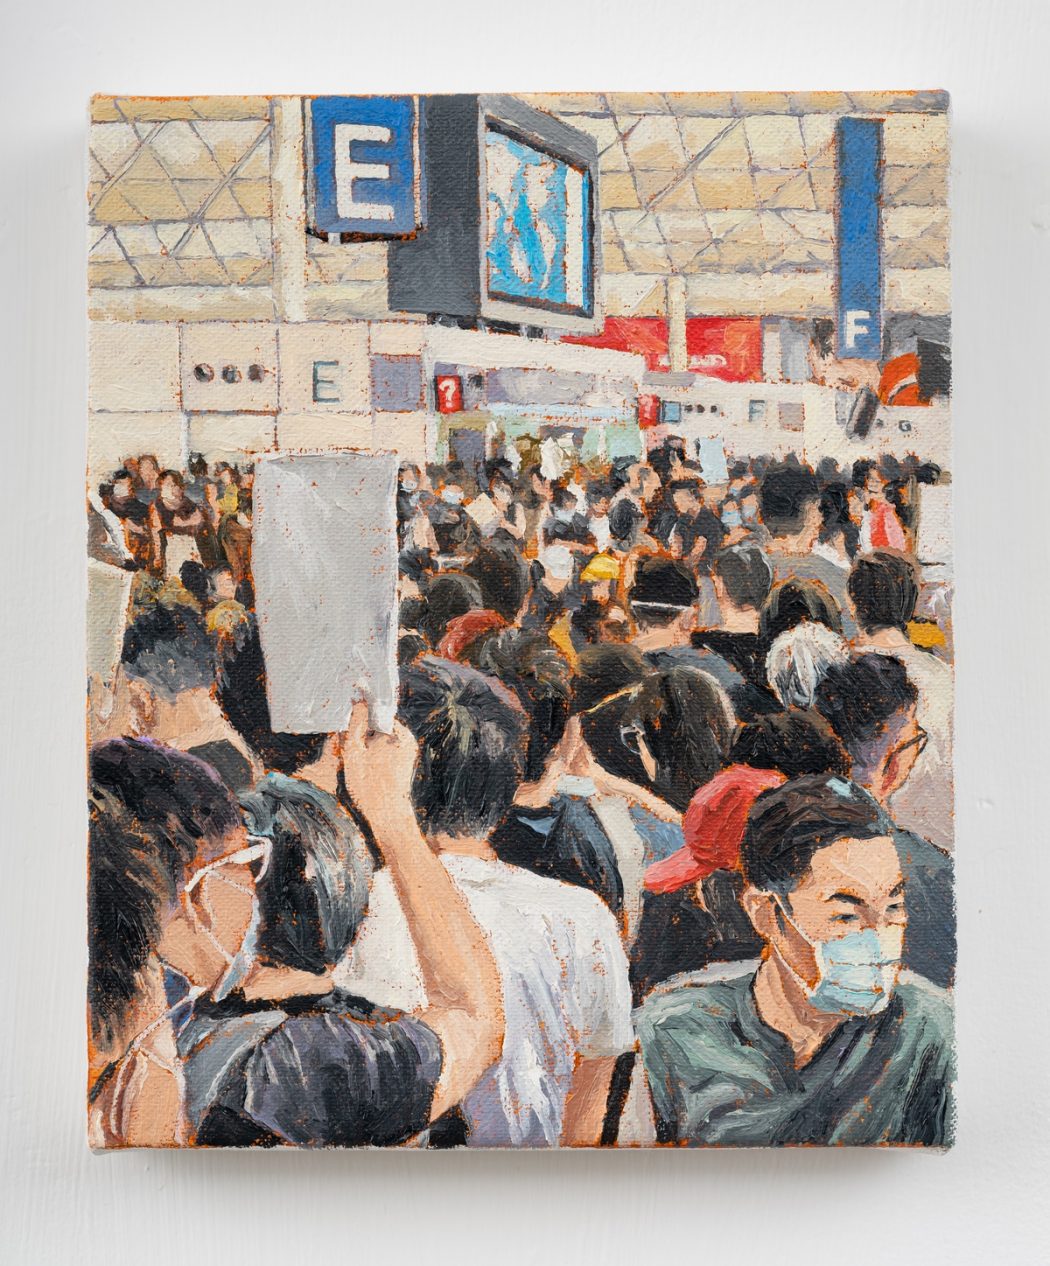 HKFP Lens Chow Chun-fai protest Hong Kong International Airport